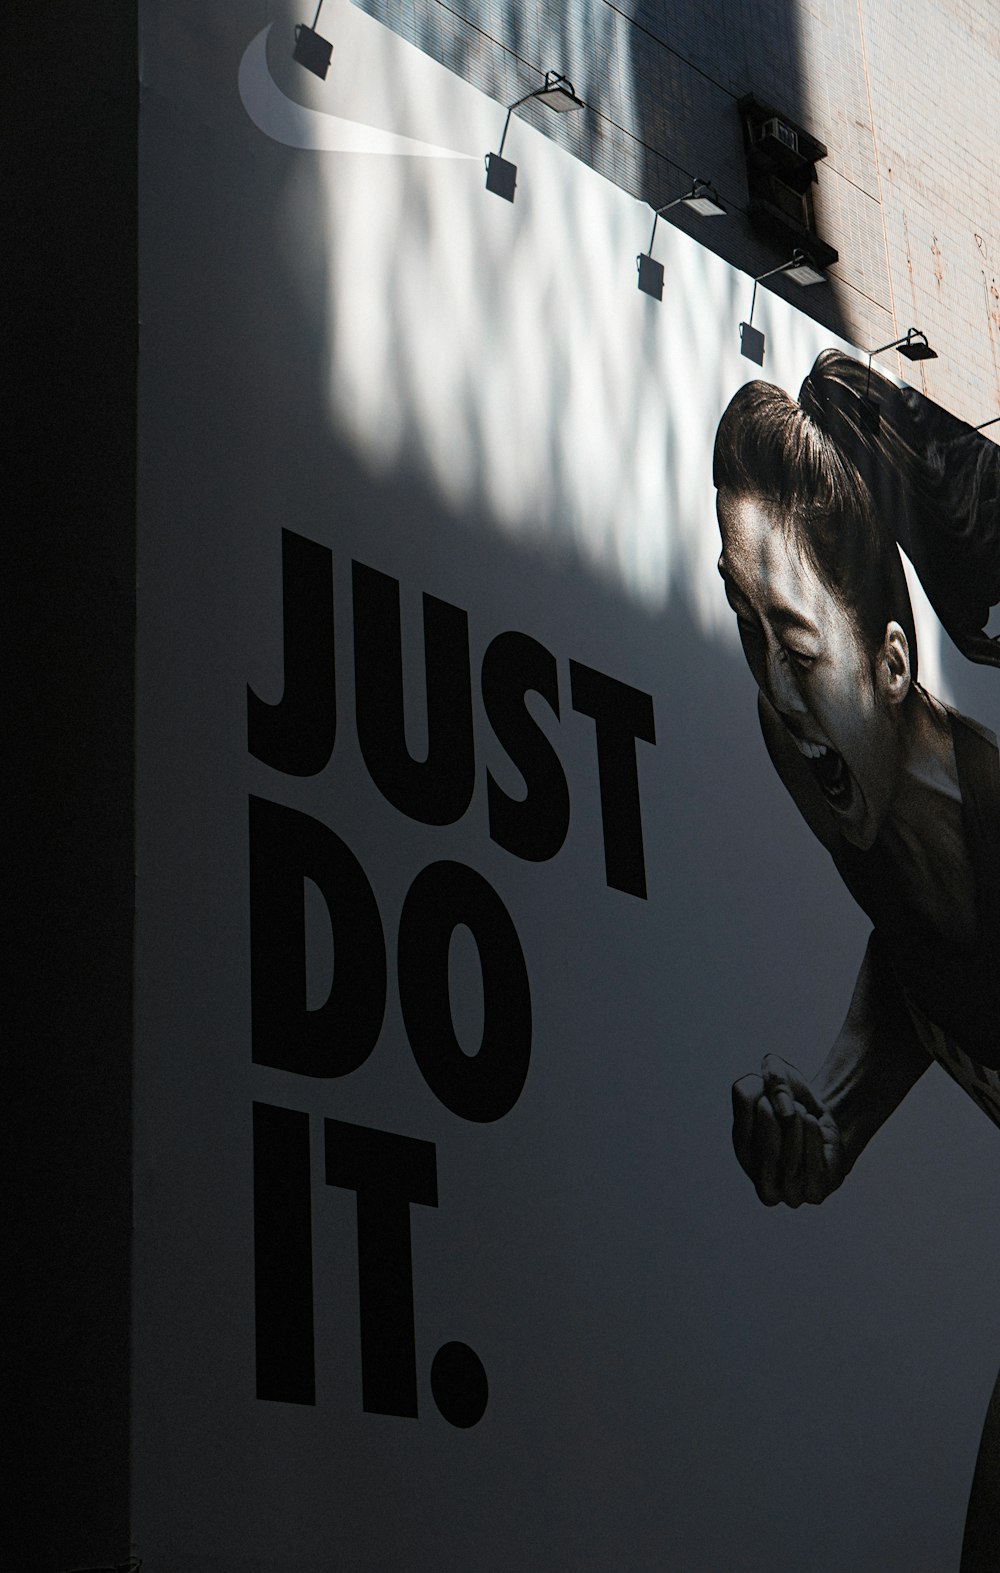 Nike Just Do It. advertisement tarpaulin